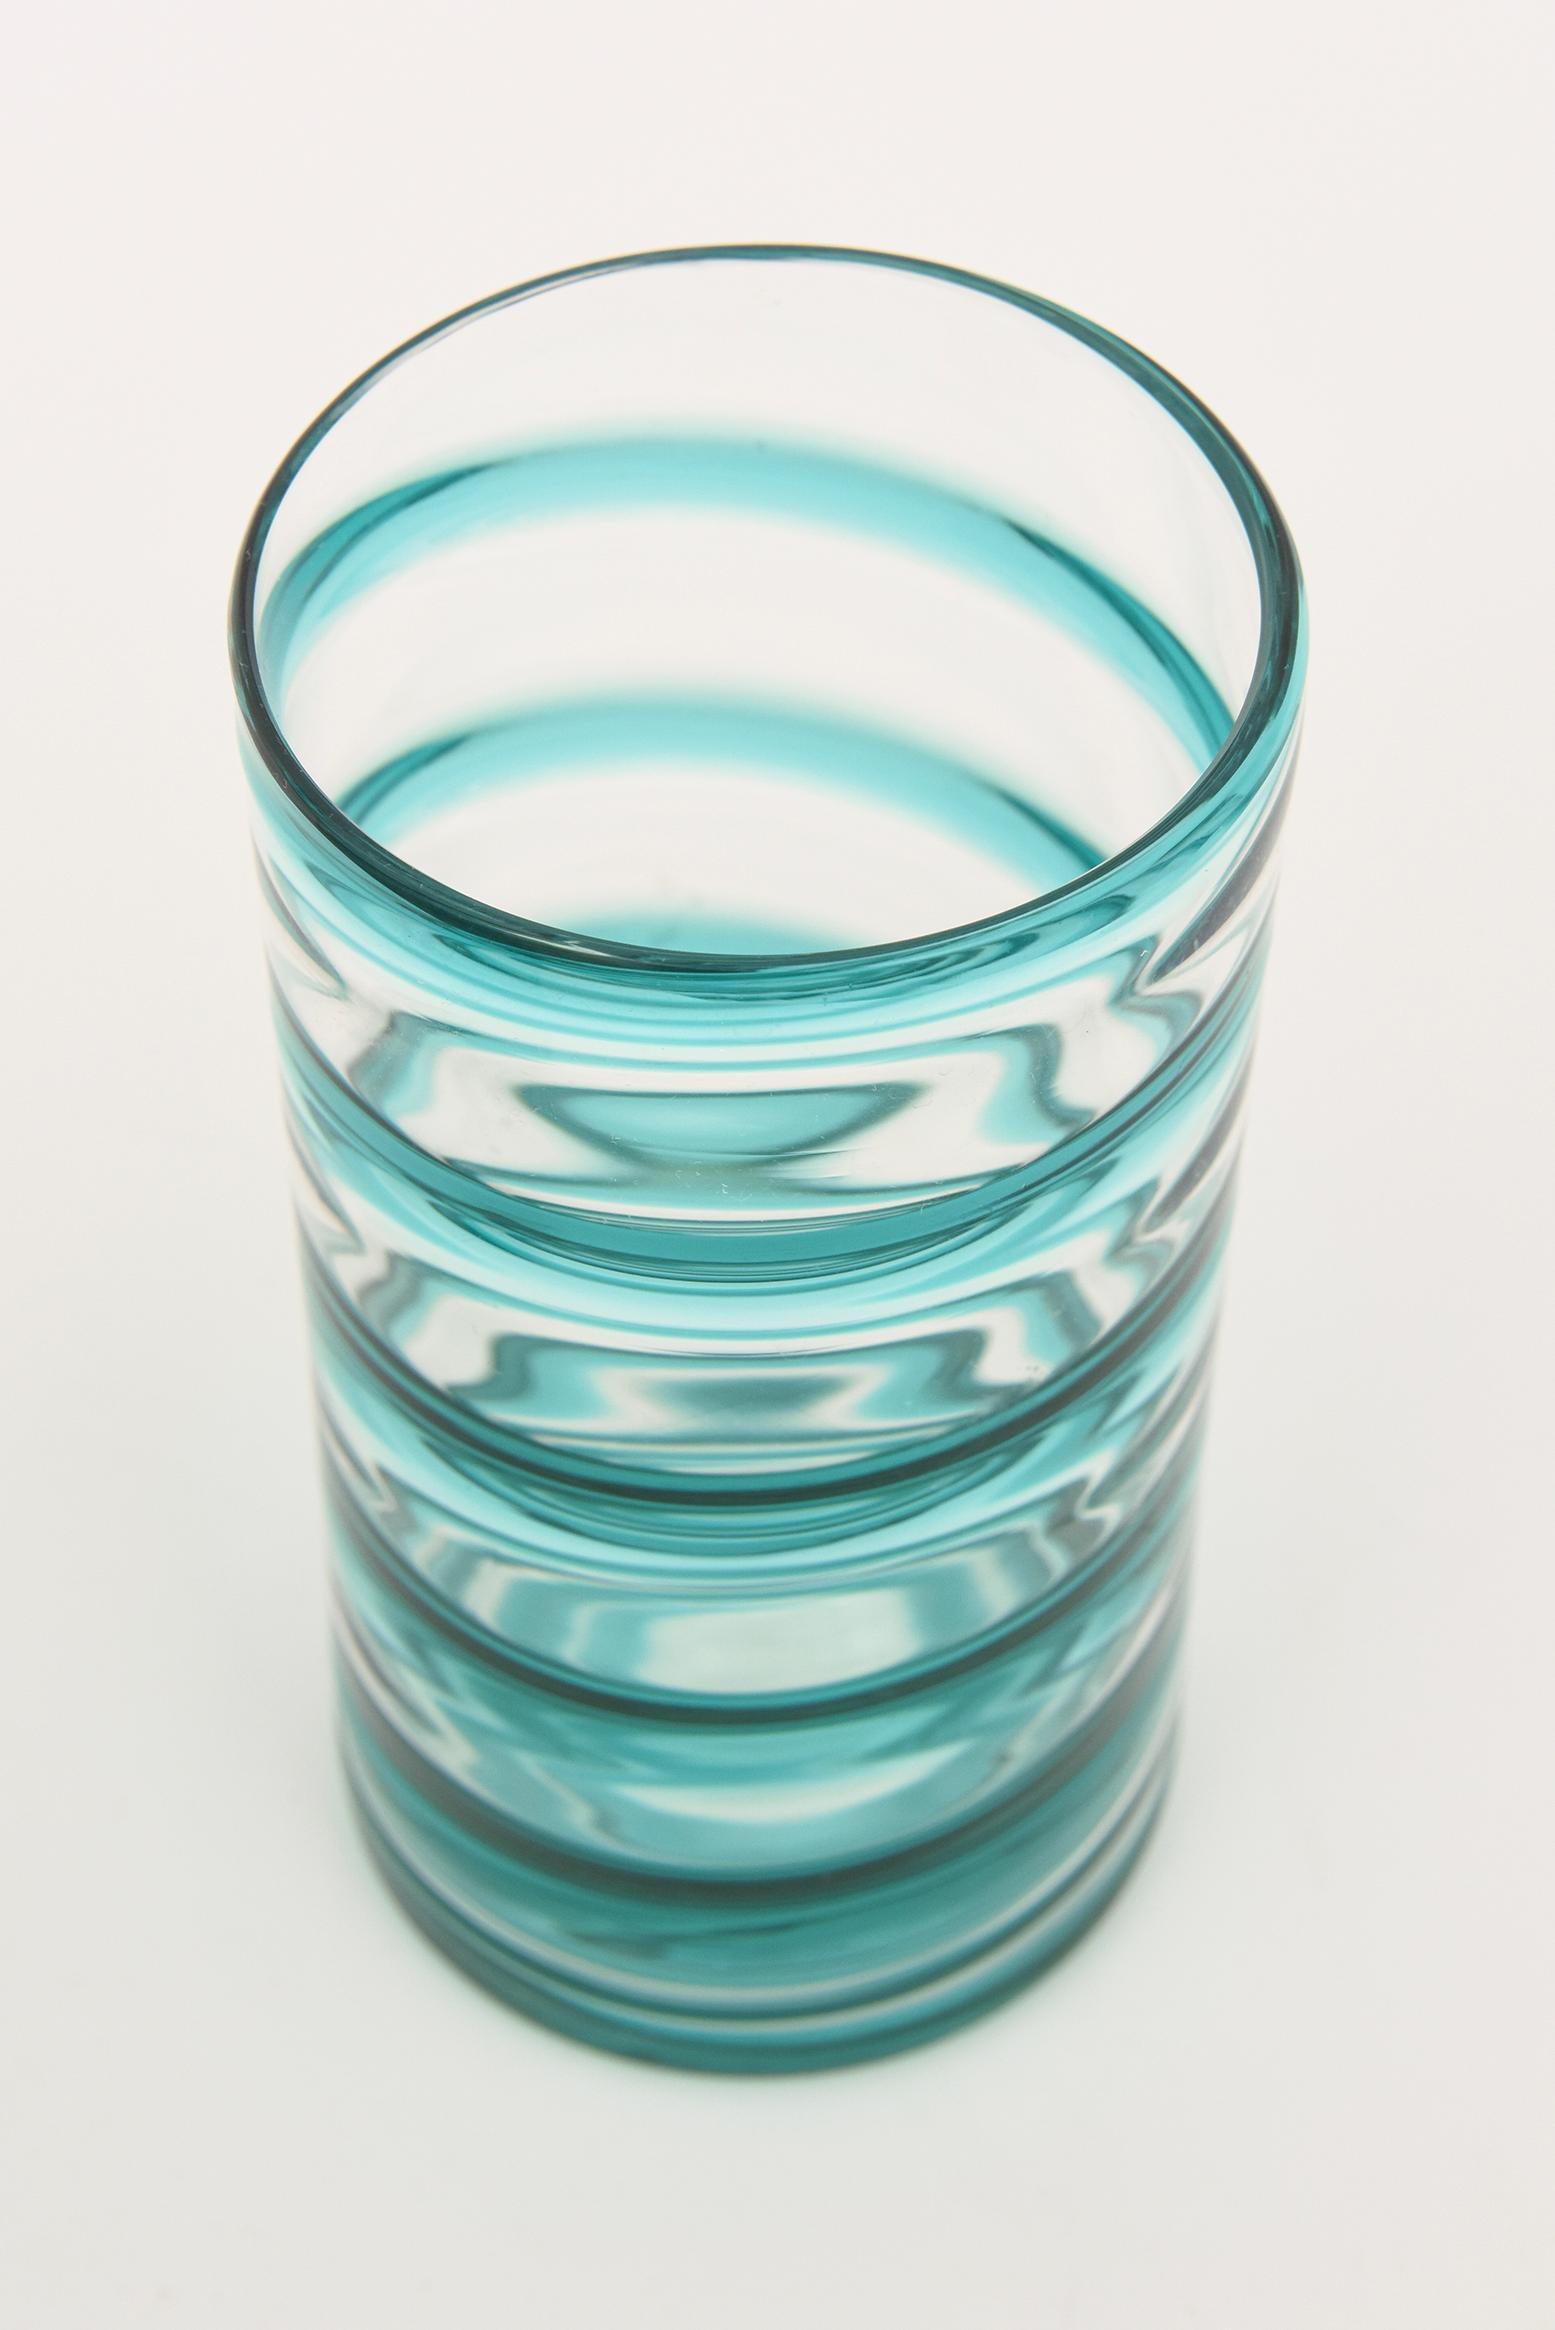 Mid-20th Century Murano Venini Turquoise Glass Swirled Ice Tea Or Lemonade Pitcher & Glasses Set For Sale